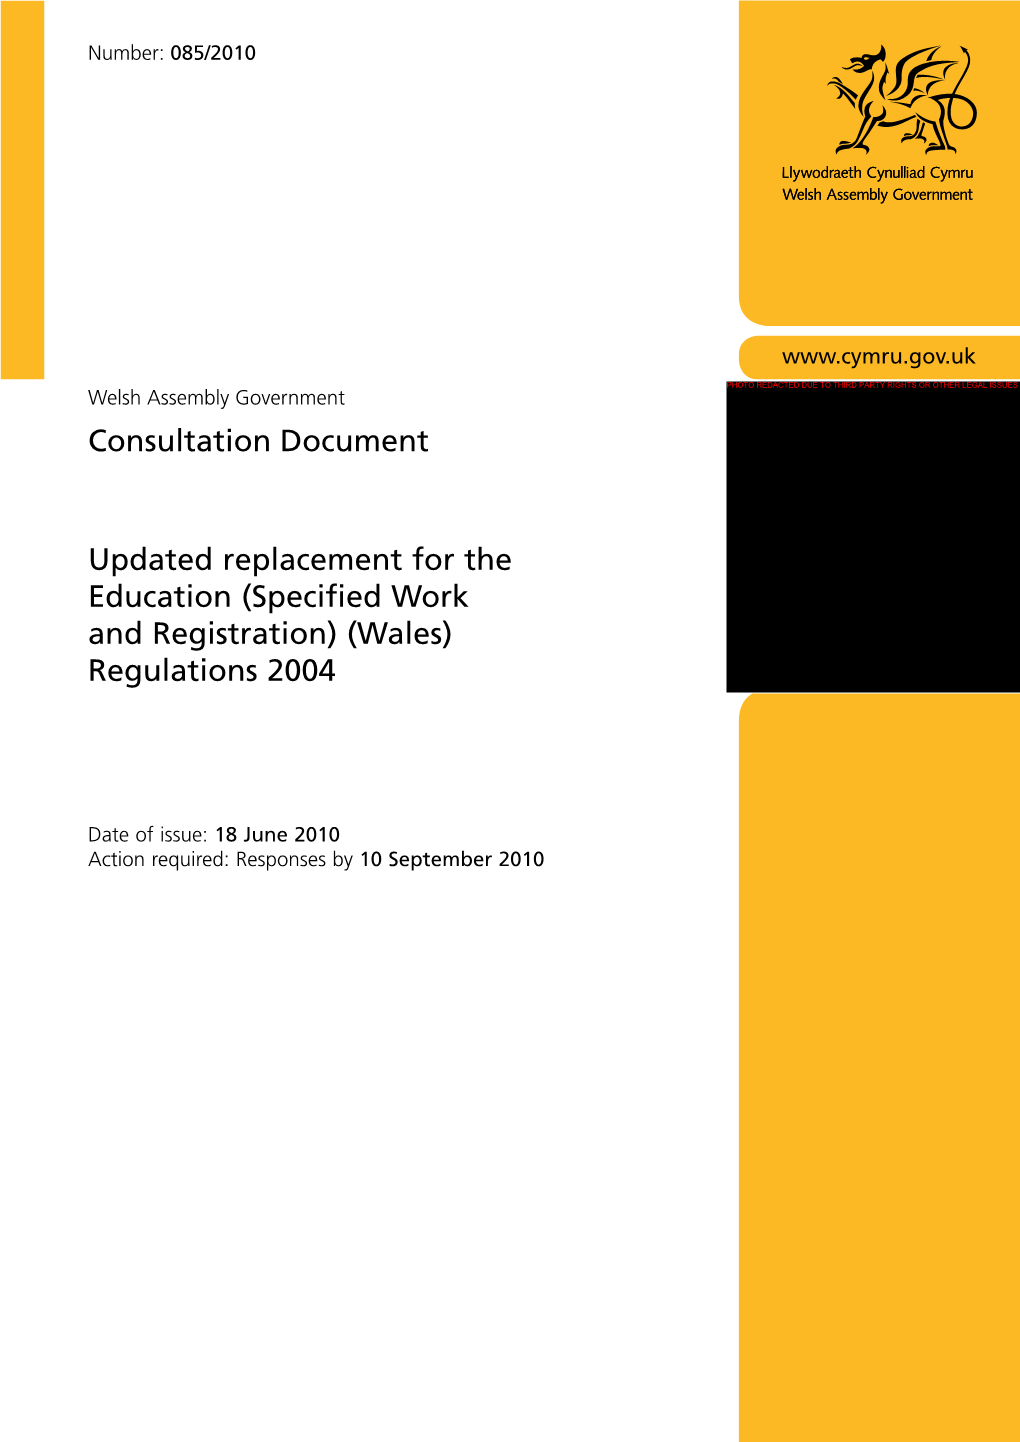 Wales) Regulations 2004